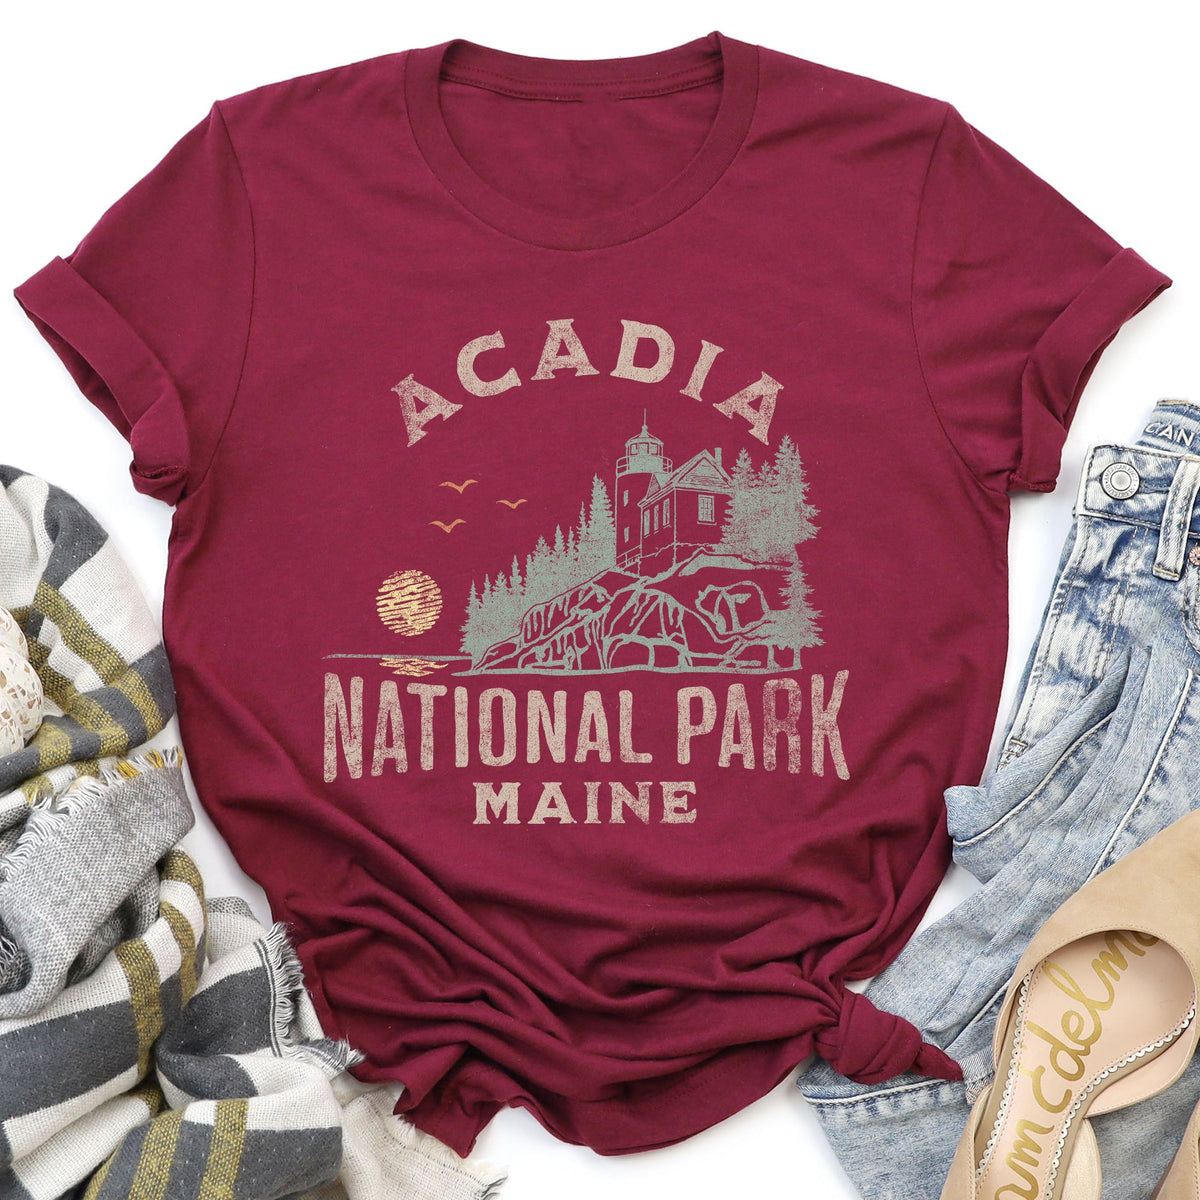 Superweiches T-Shirt des Acadia-Nationalparks